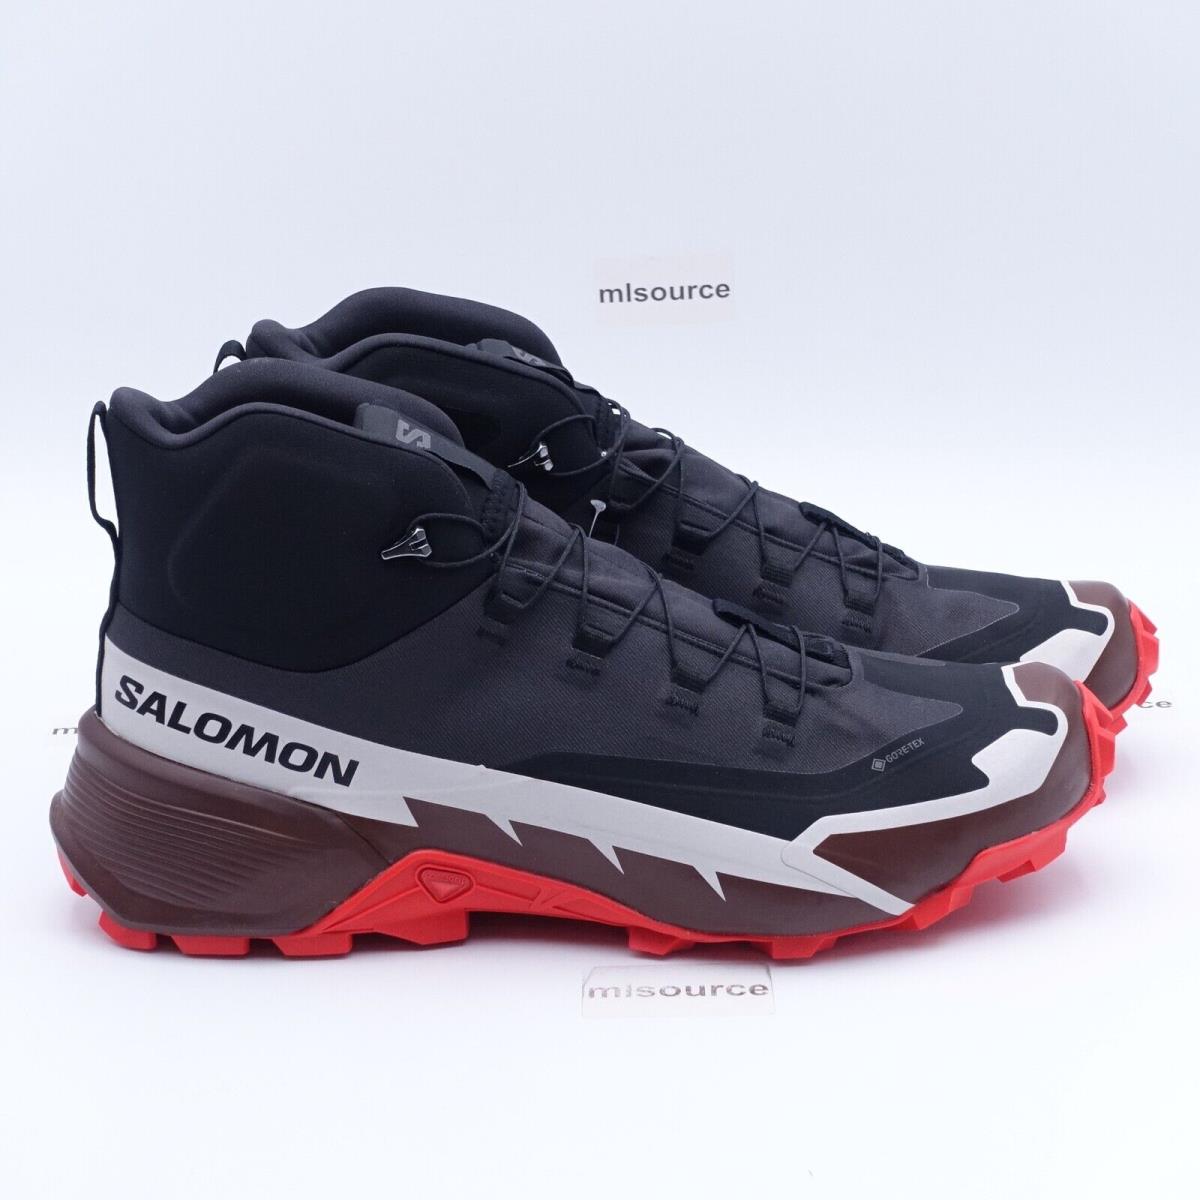 Salomon shoes  - Black , Black/Bitter Chocolate/Fiery Red Manufacturer 1